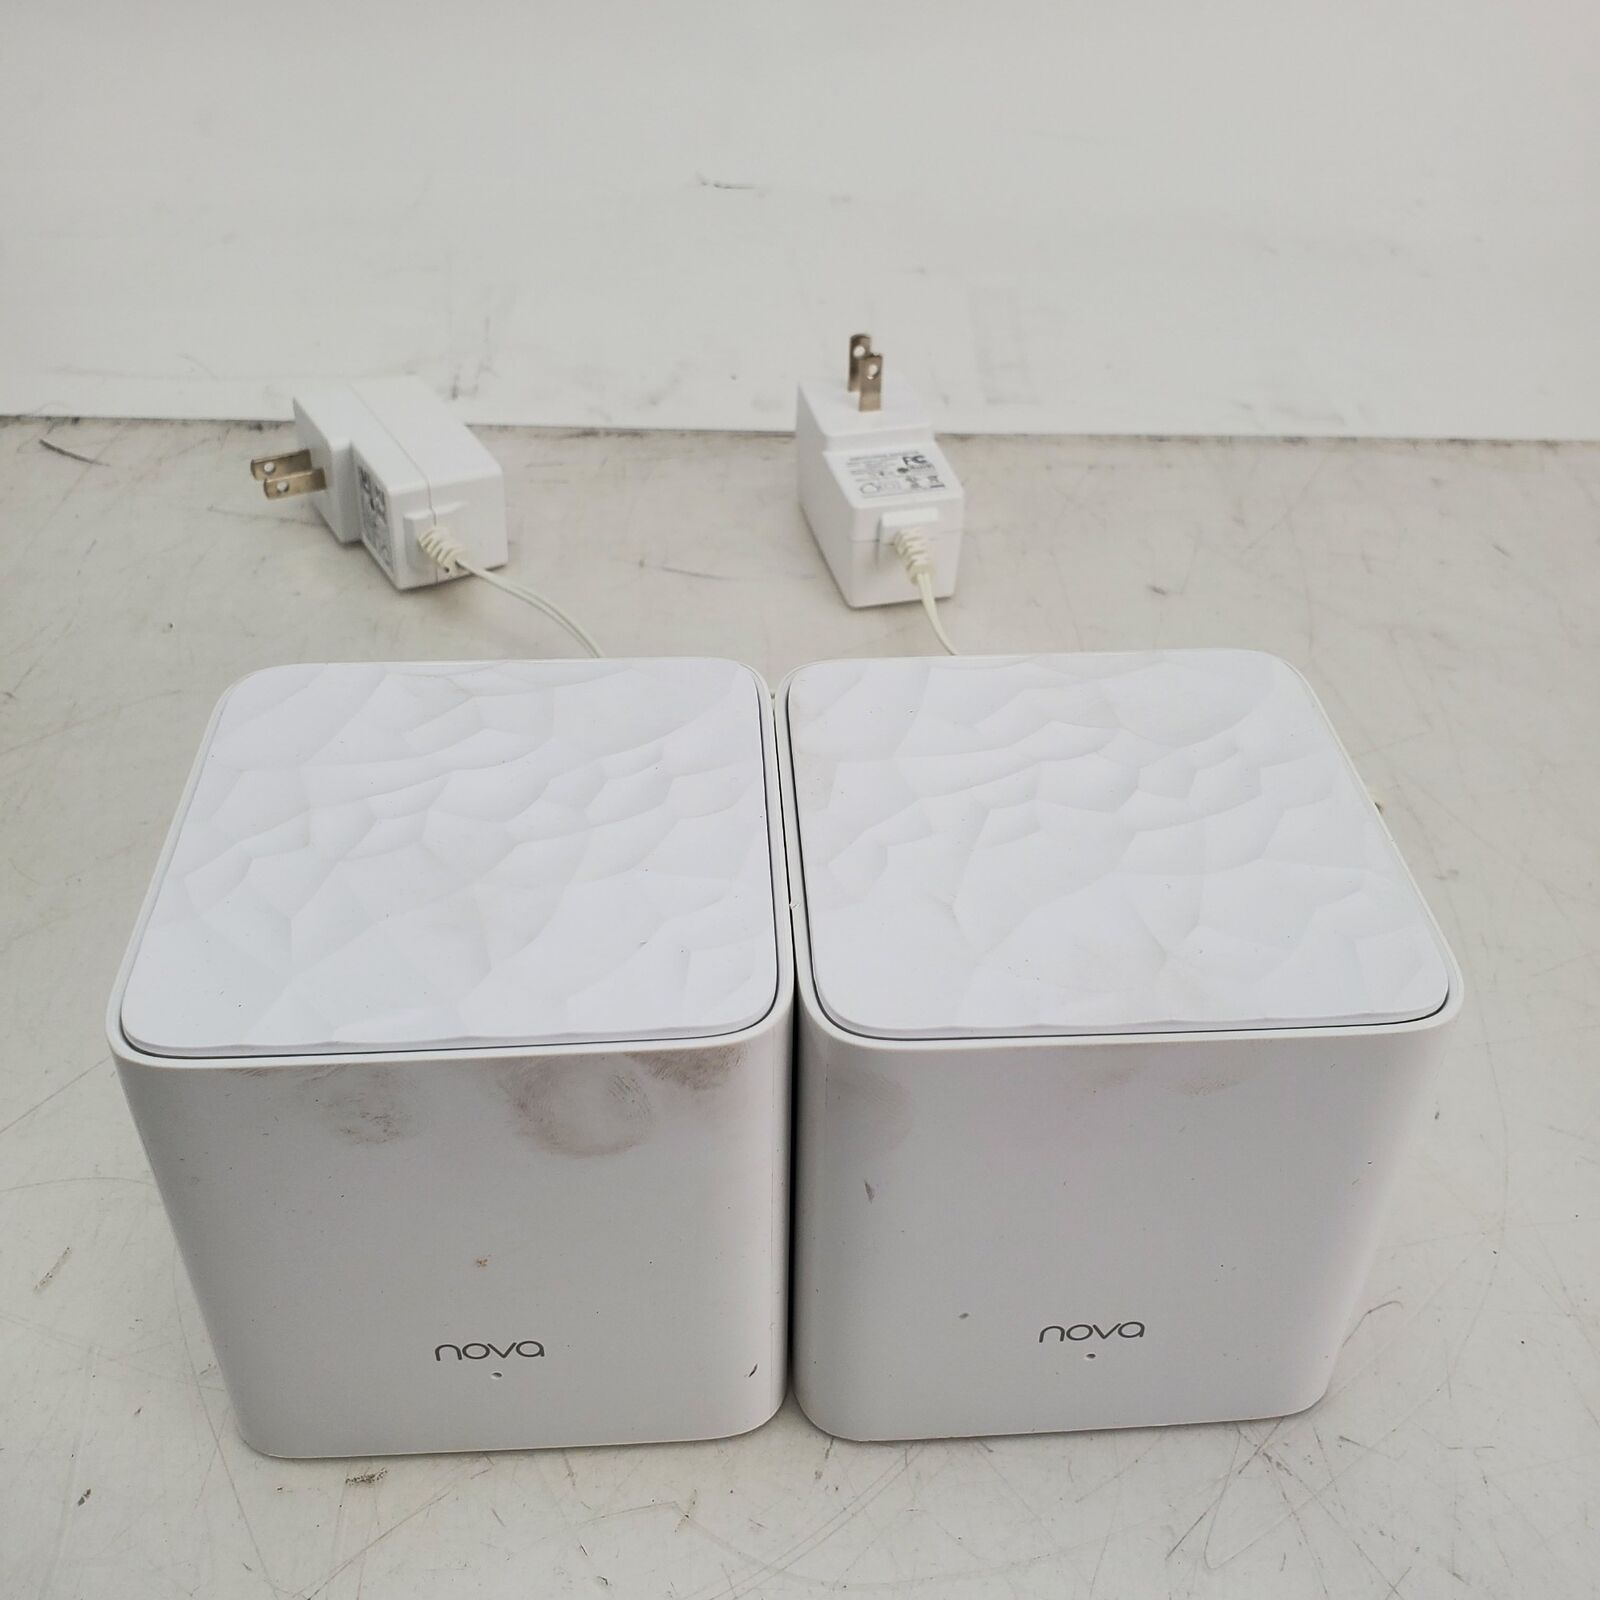 Tenda Nova Mesh3f White AC1200 Whole Room Mesh WiFi System - Lot of 2